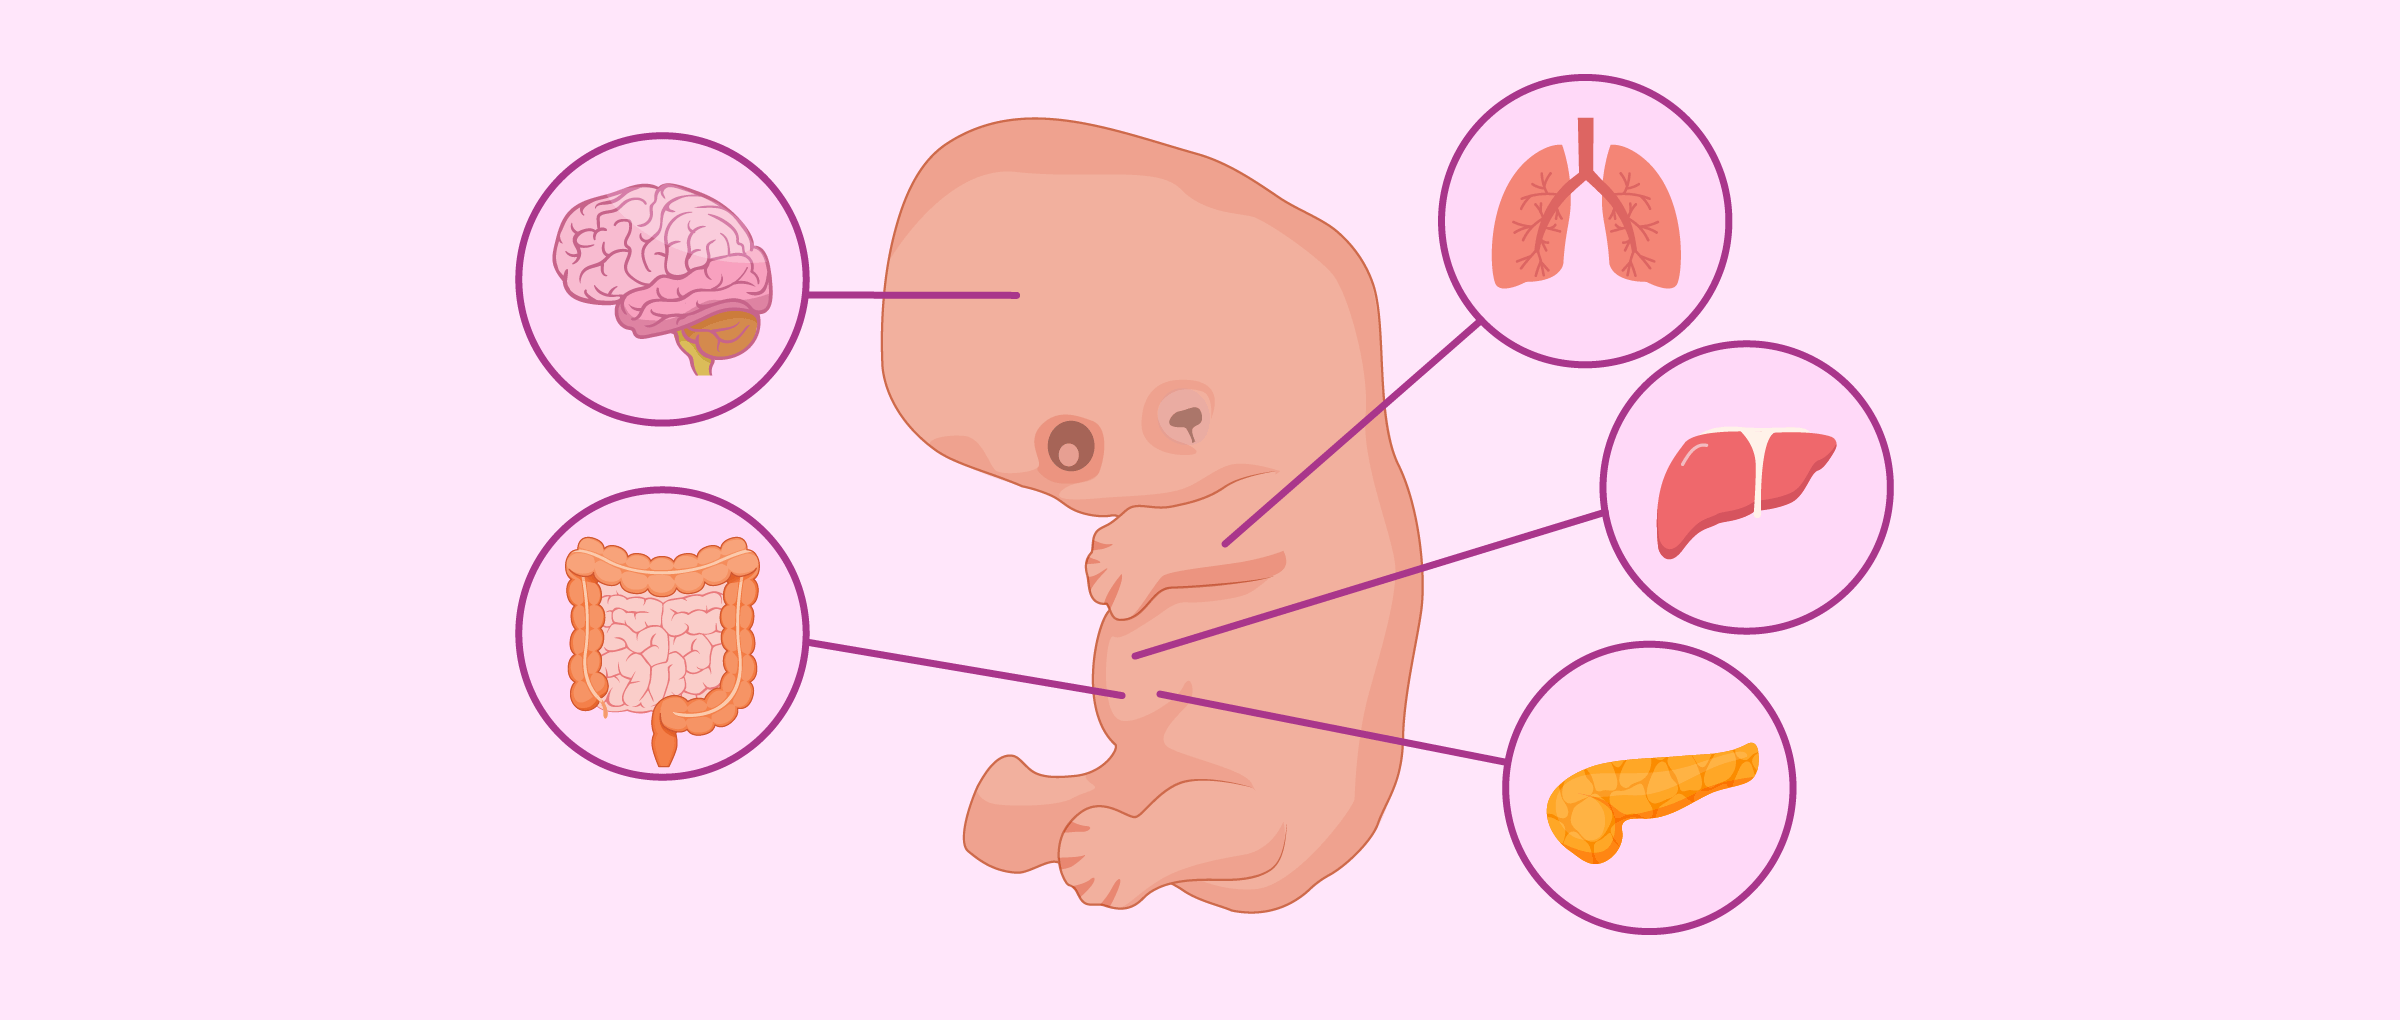 Embryo at 7th week of pregnancy